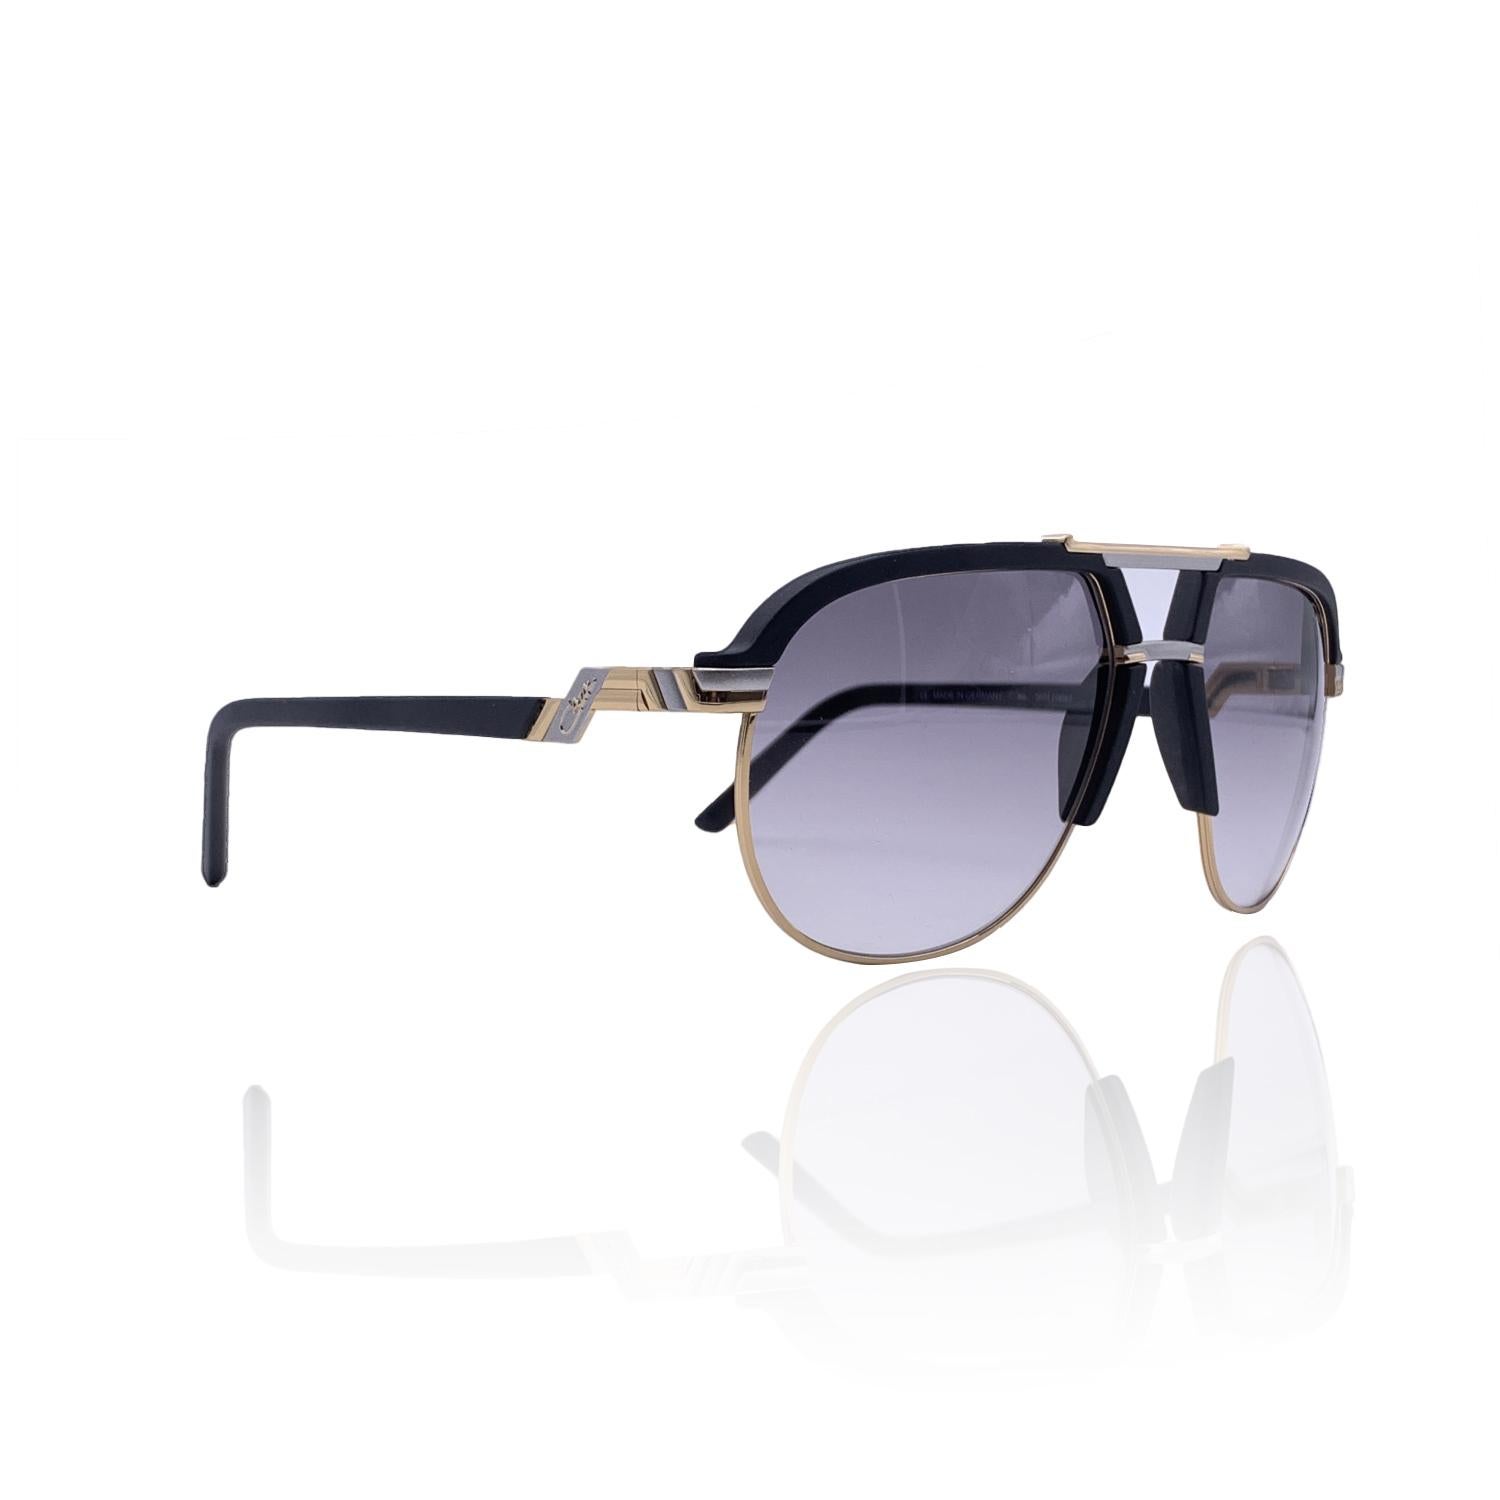 Cazal Black Aviator Sunglasses Mod.9085 Col. 002 61/17 140 mm In Excellent Condition For Sale In Rome, Rome